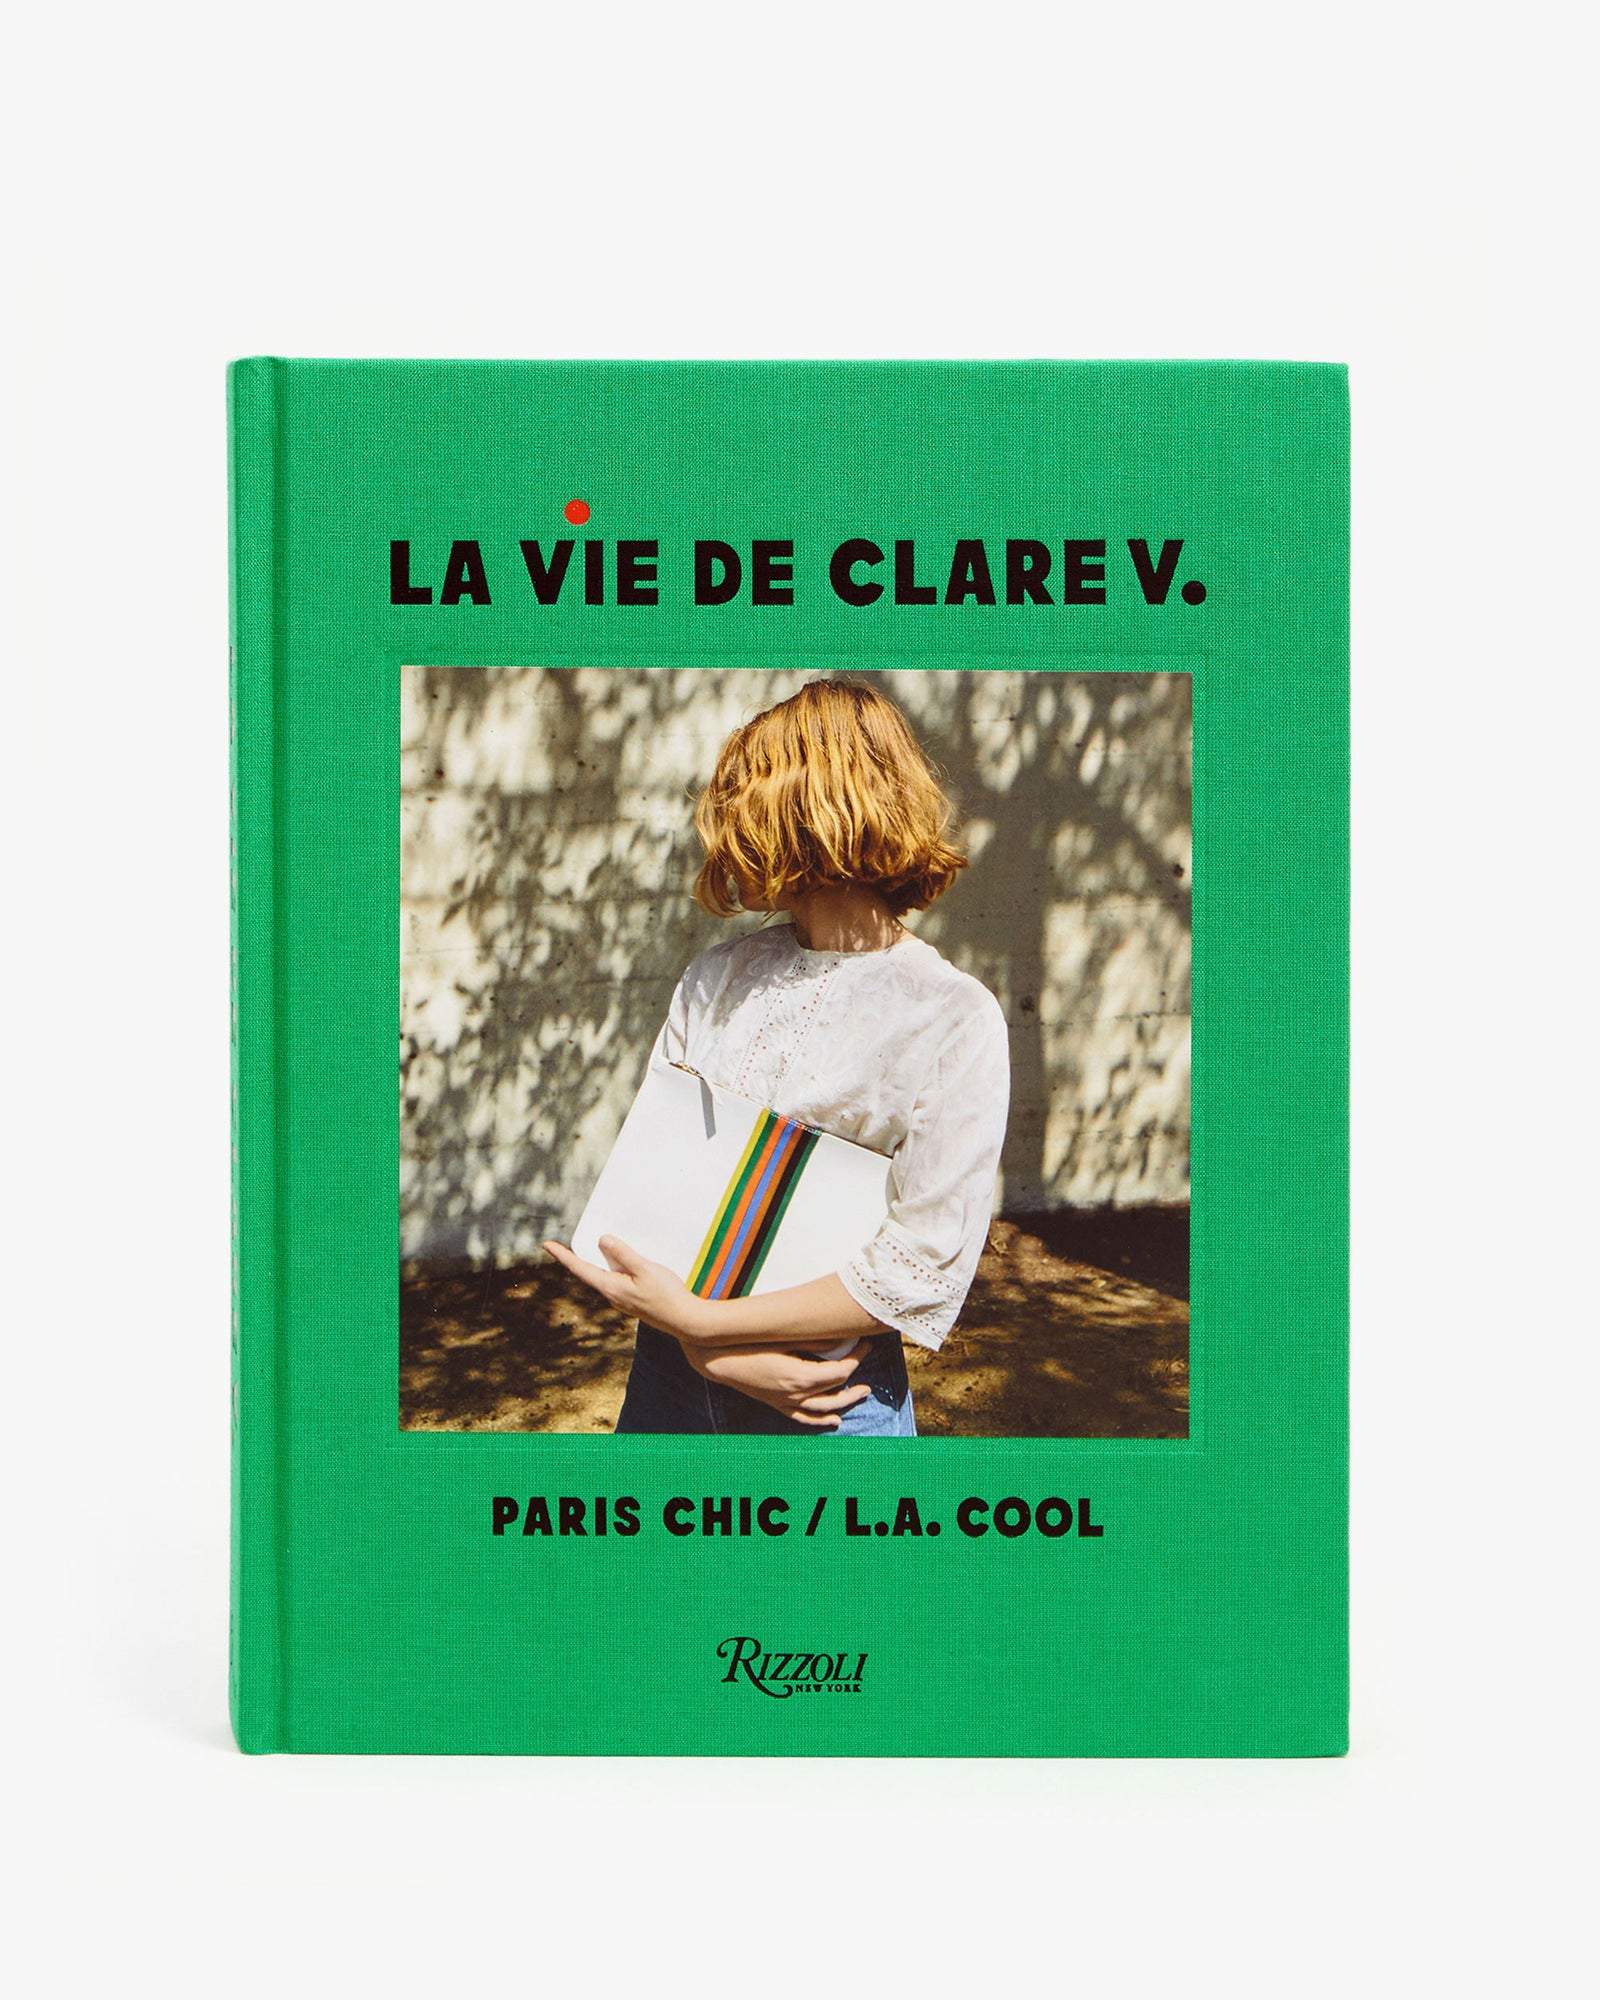 Le Vie de Clare V. Book cover